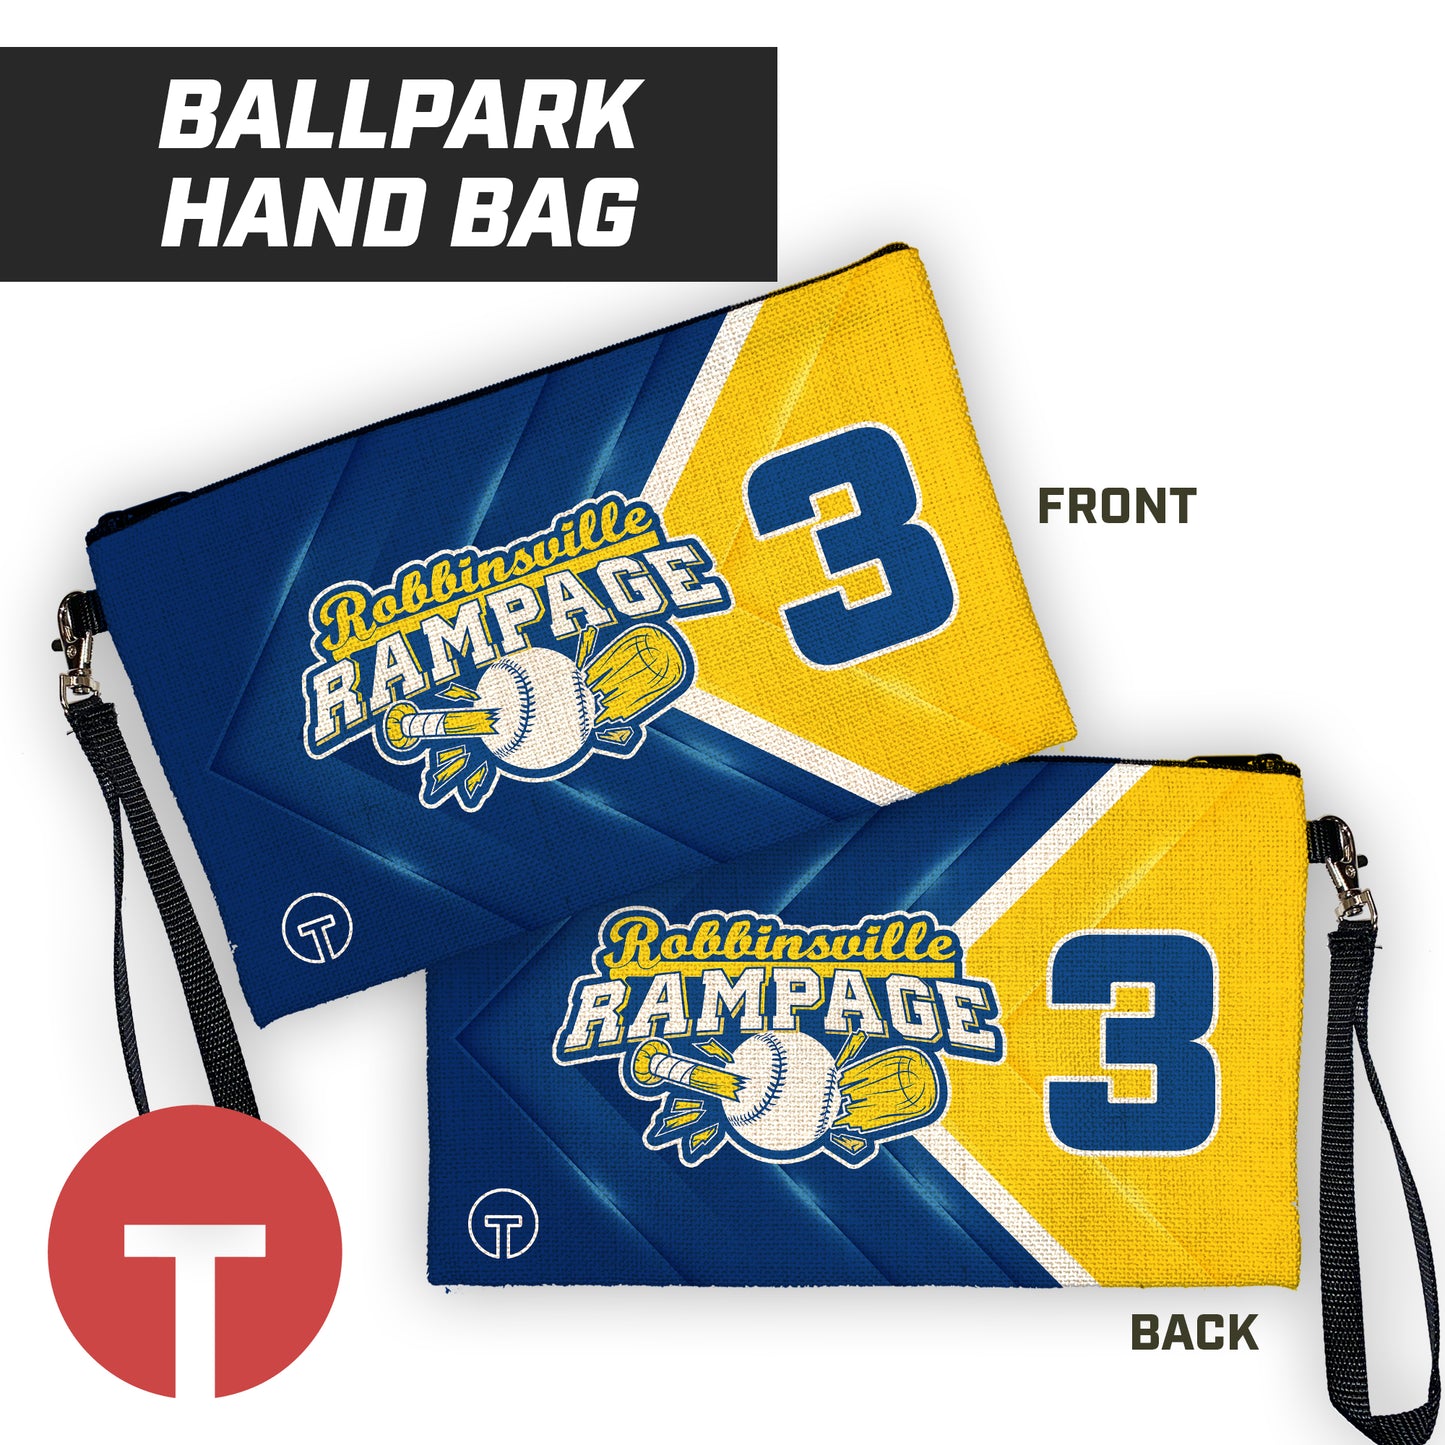 Robbinsville Rampage - 9"x5" Zipper Bag with Wrist Strap